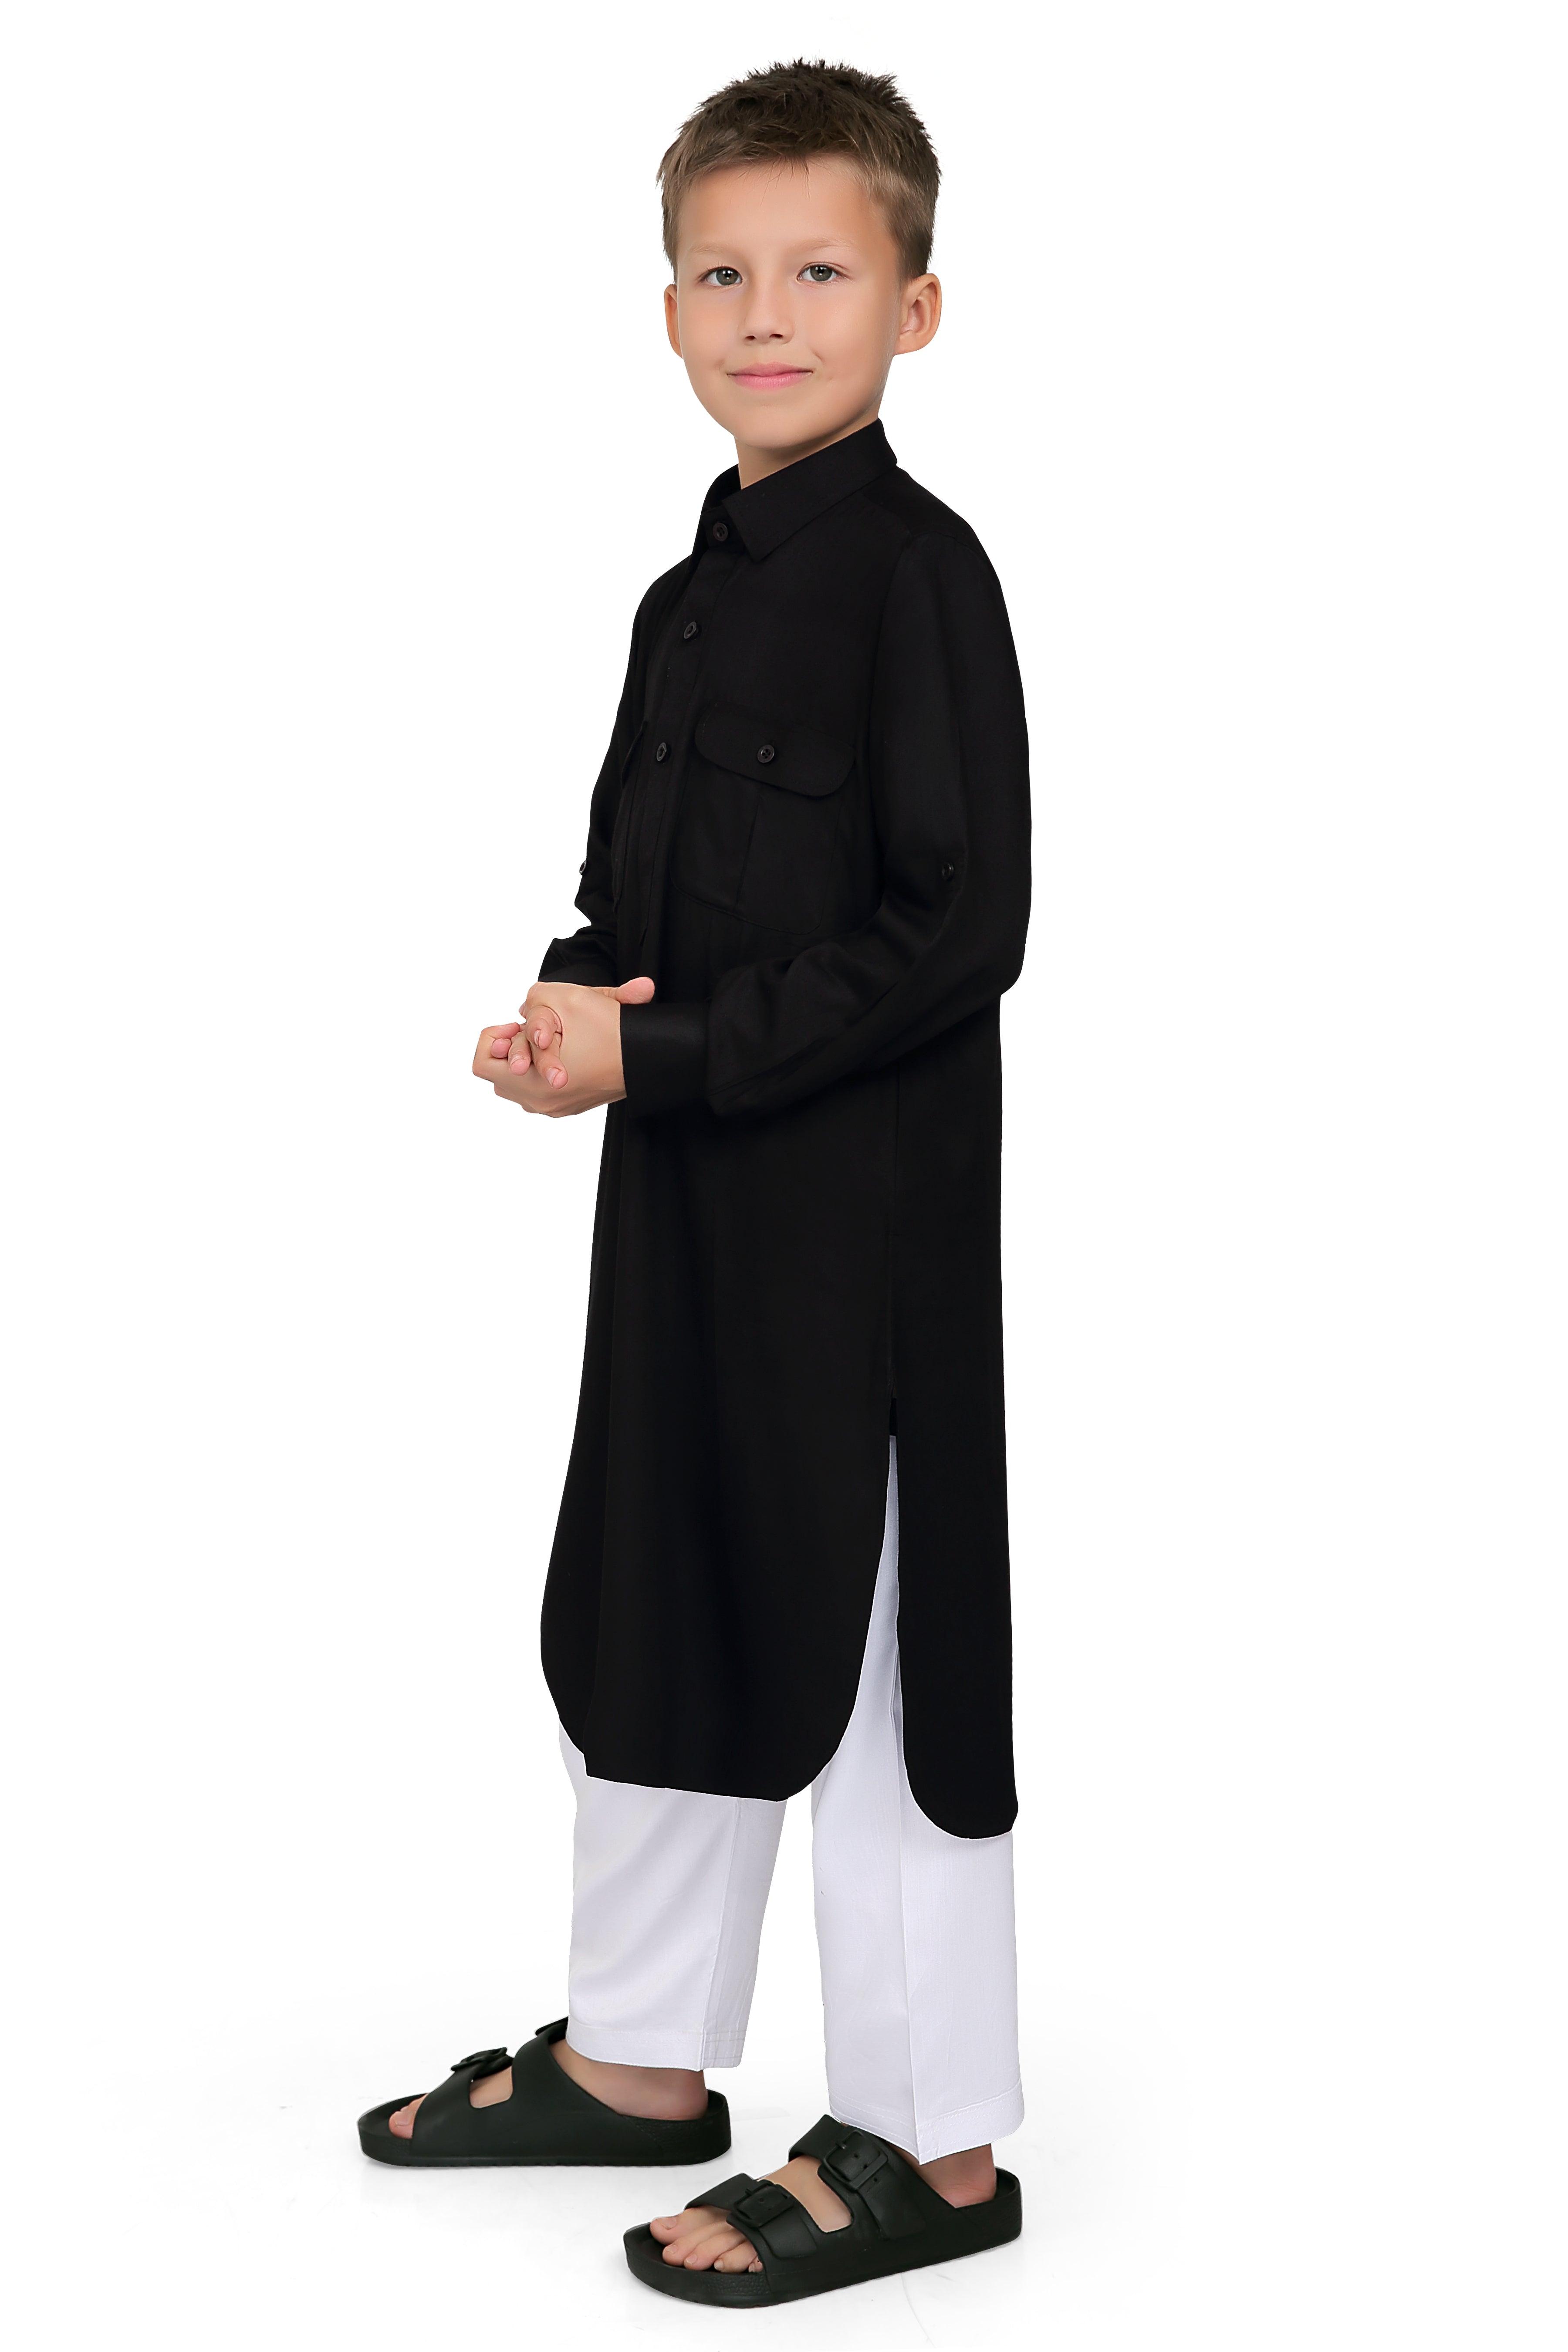 Oday Black Pathani Suit for Kids - Mashroo